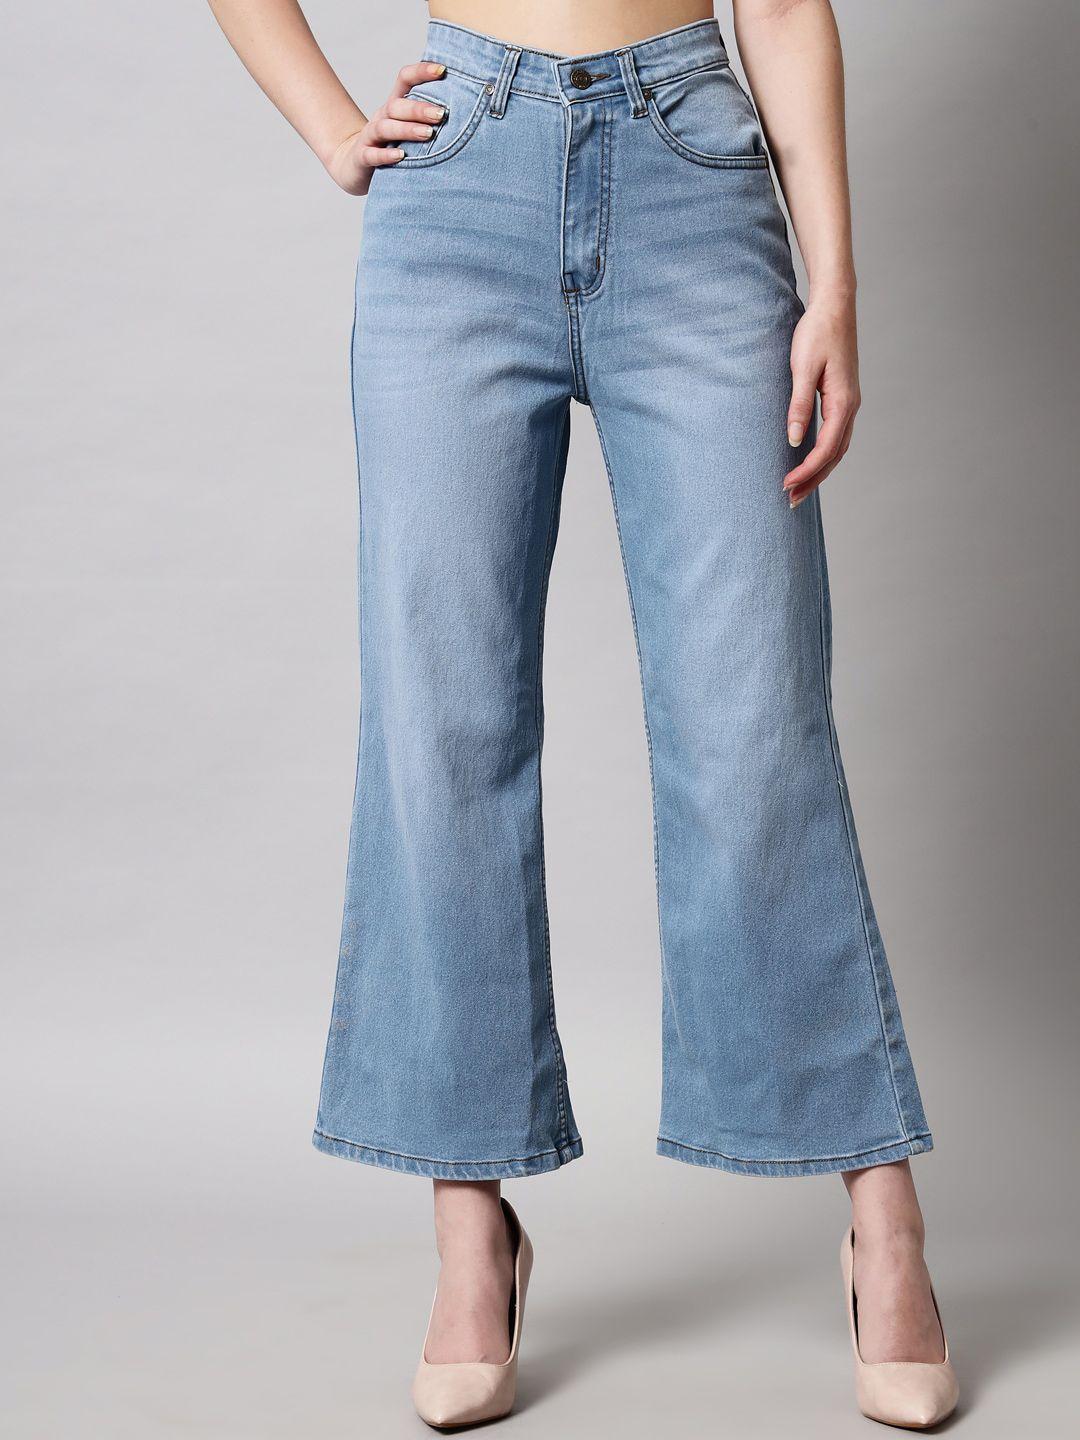 guti-women-bootcut-high-rise-light-fade-stretchable-cotton-jeans